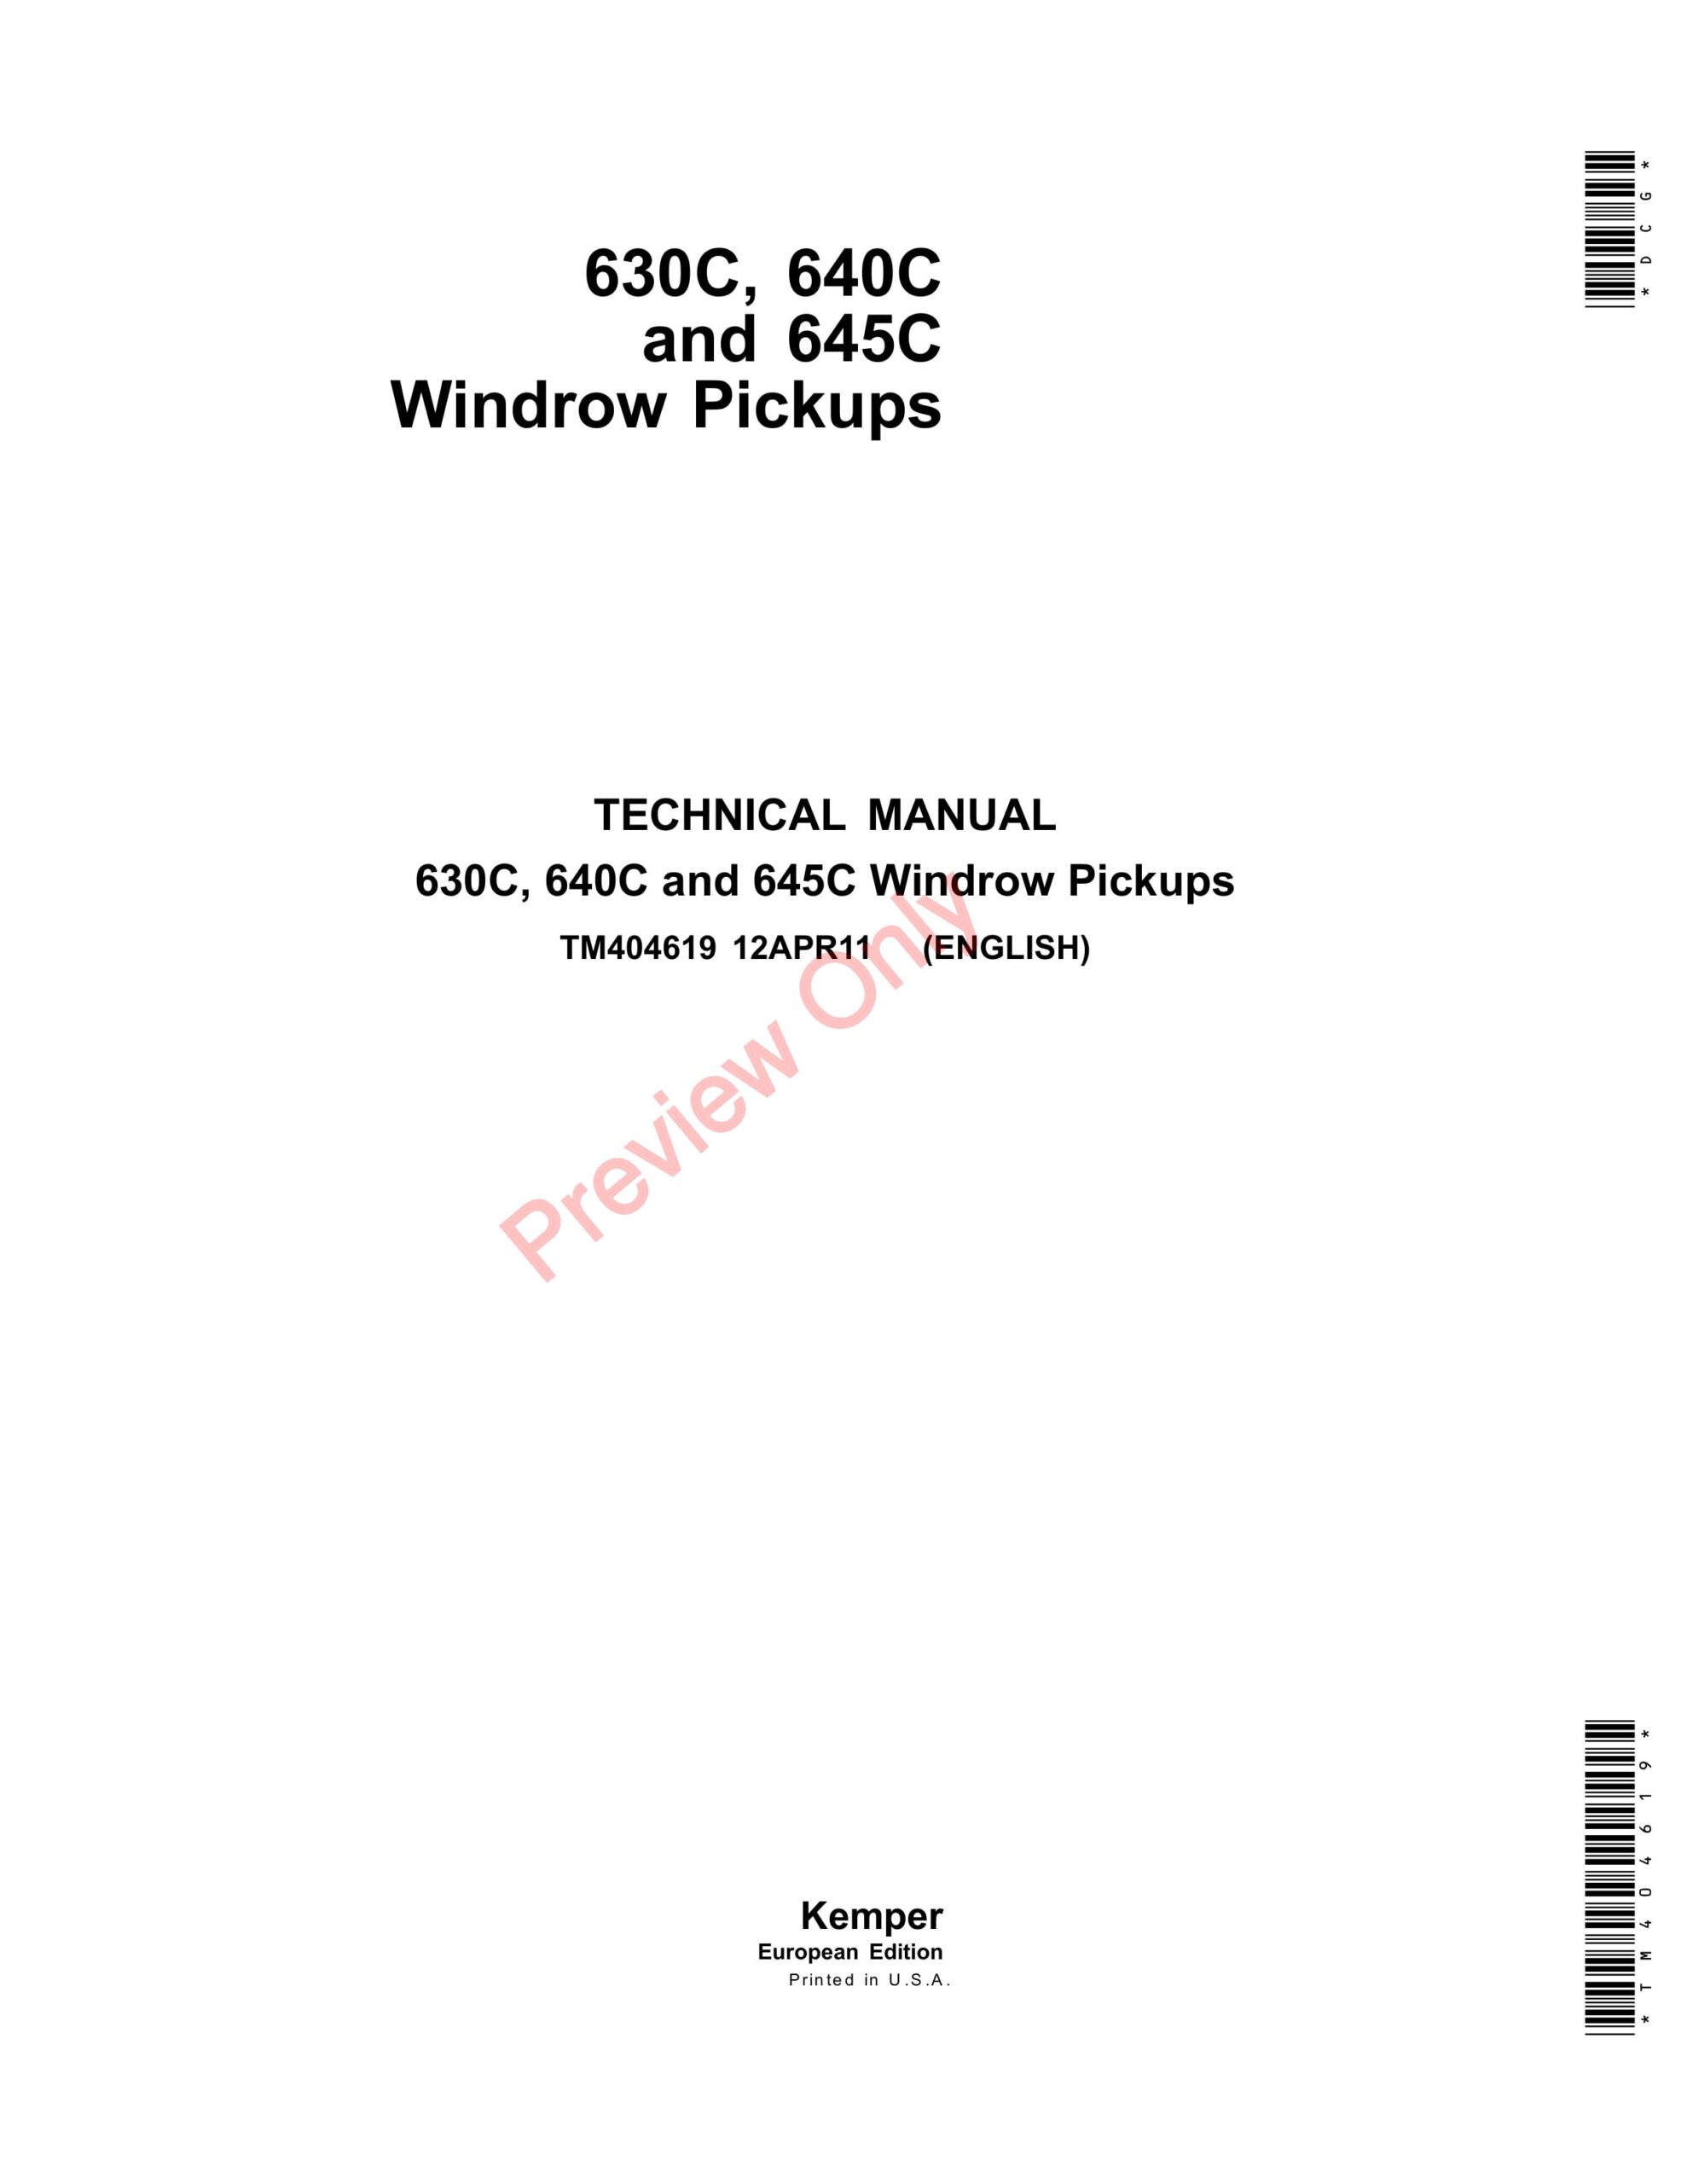 John Deere 630C, 640C and 645C Windrow Pickups Technical Manual TM404619 12APR11-1